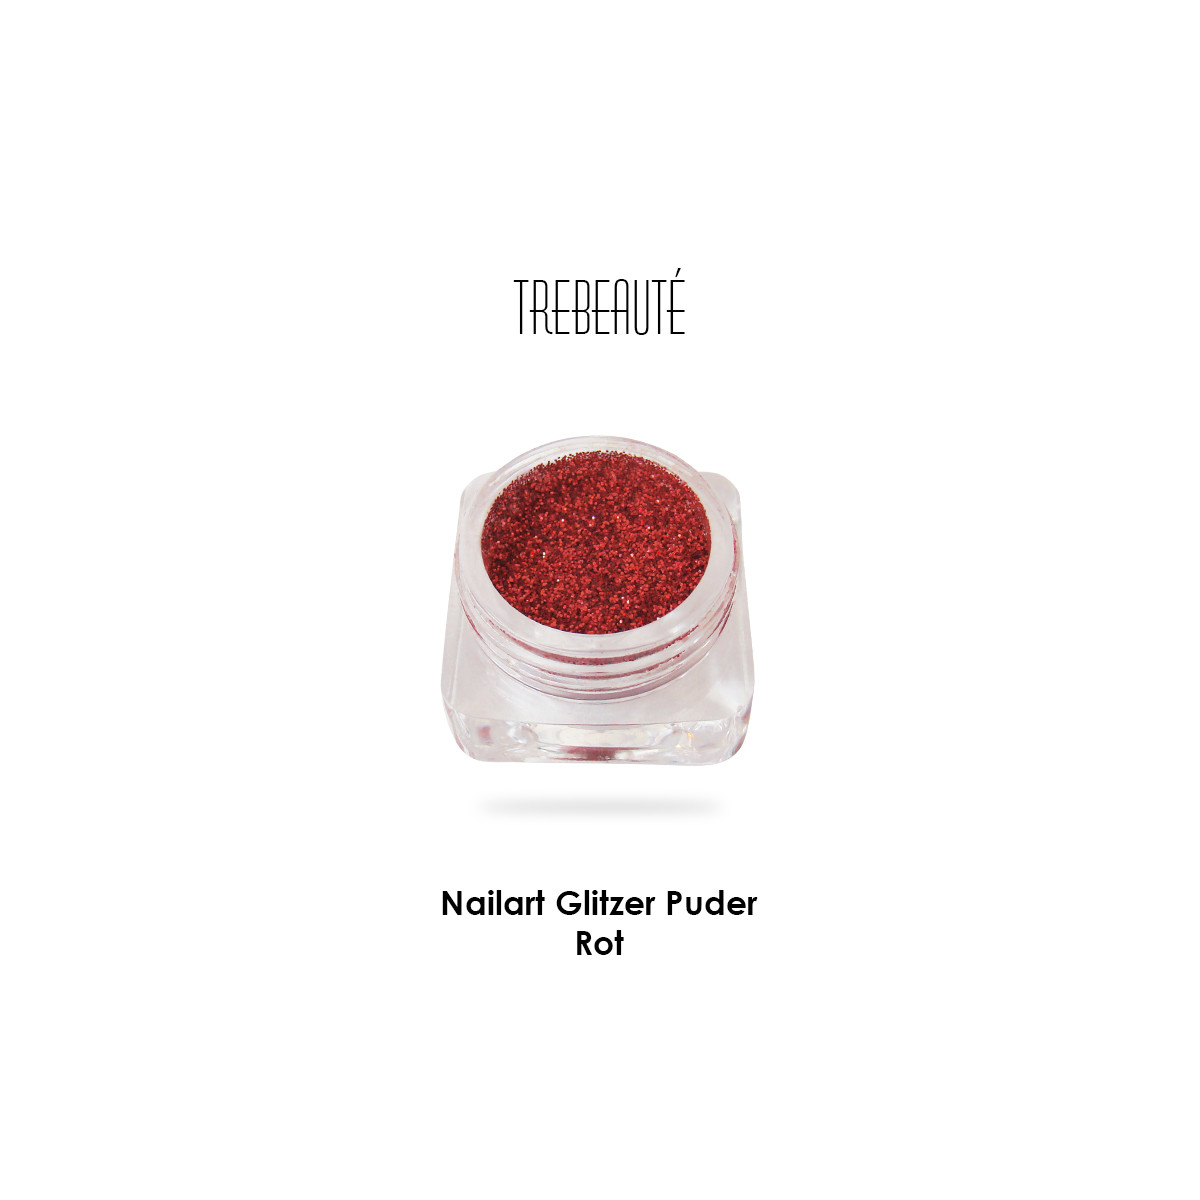 Nailart Glitzer Puder & Glitterstaub, Rot